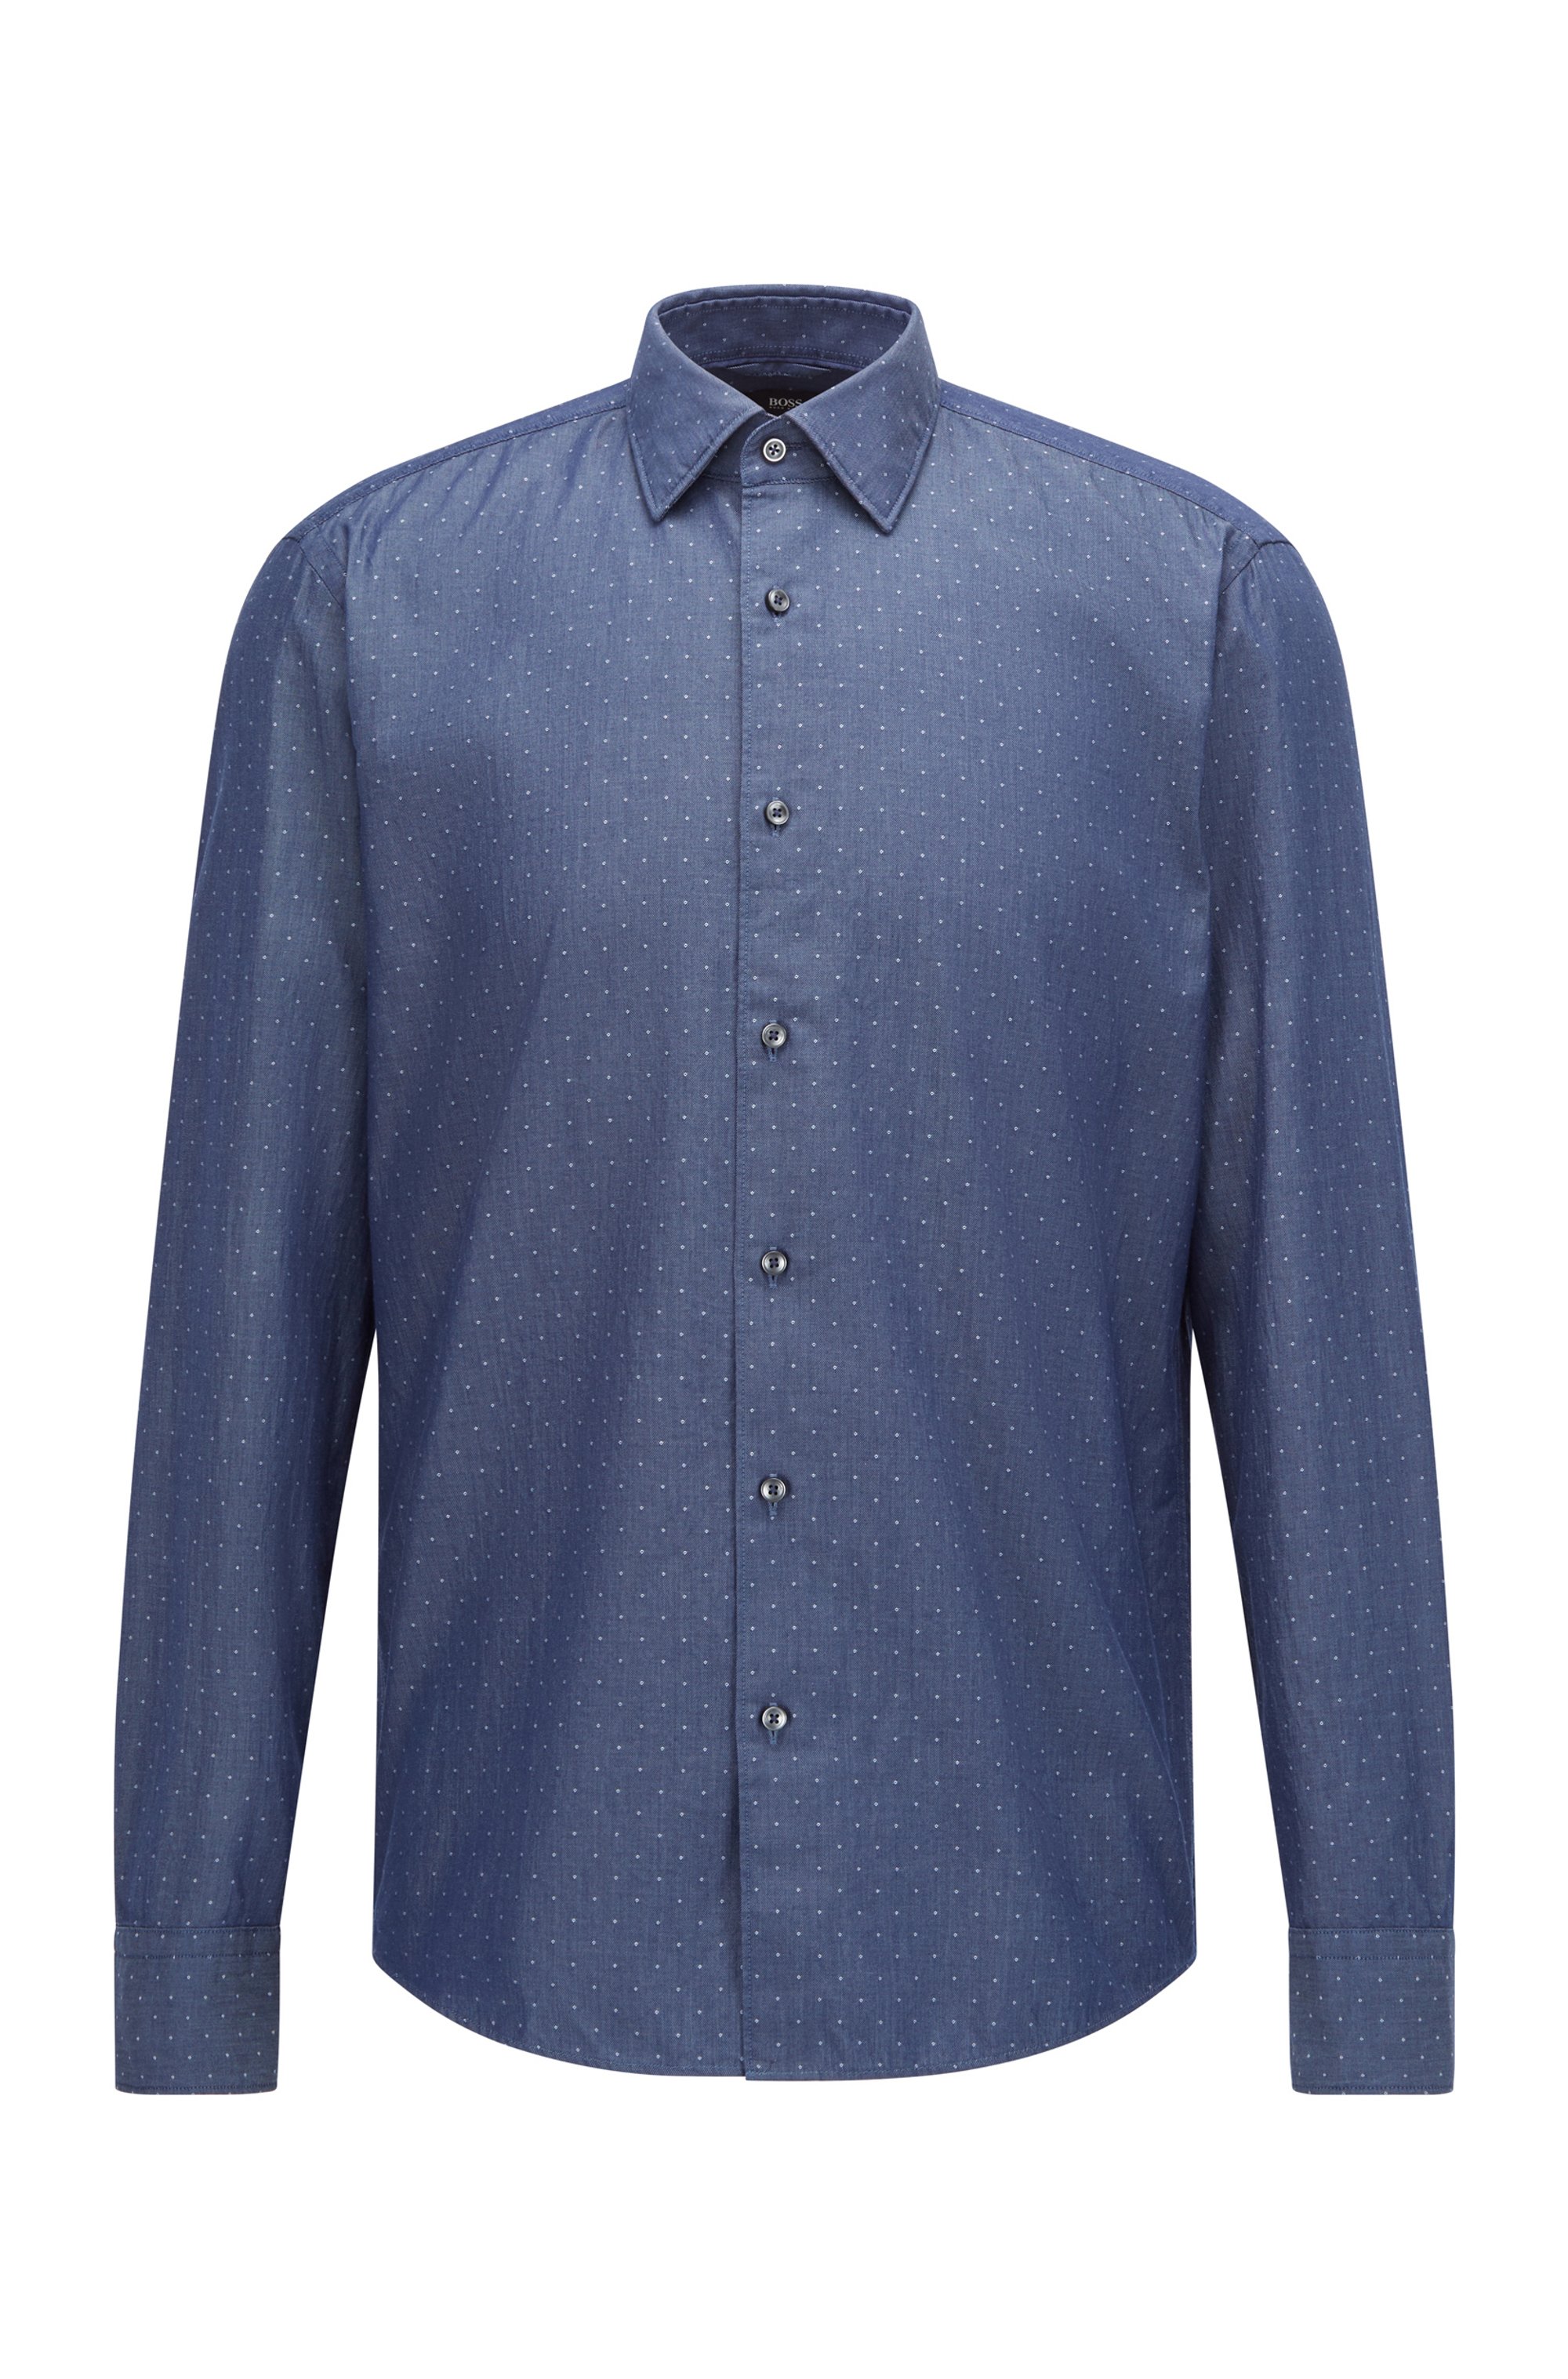 Regular-fit shirt in patterned cotton dobby, Light Blue